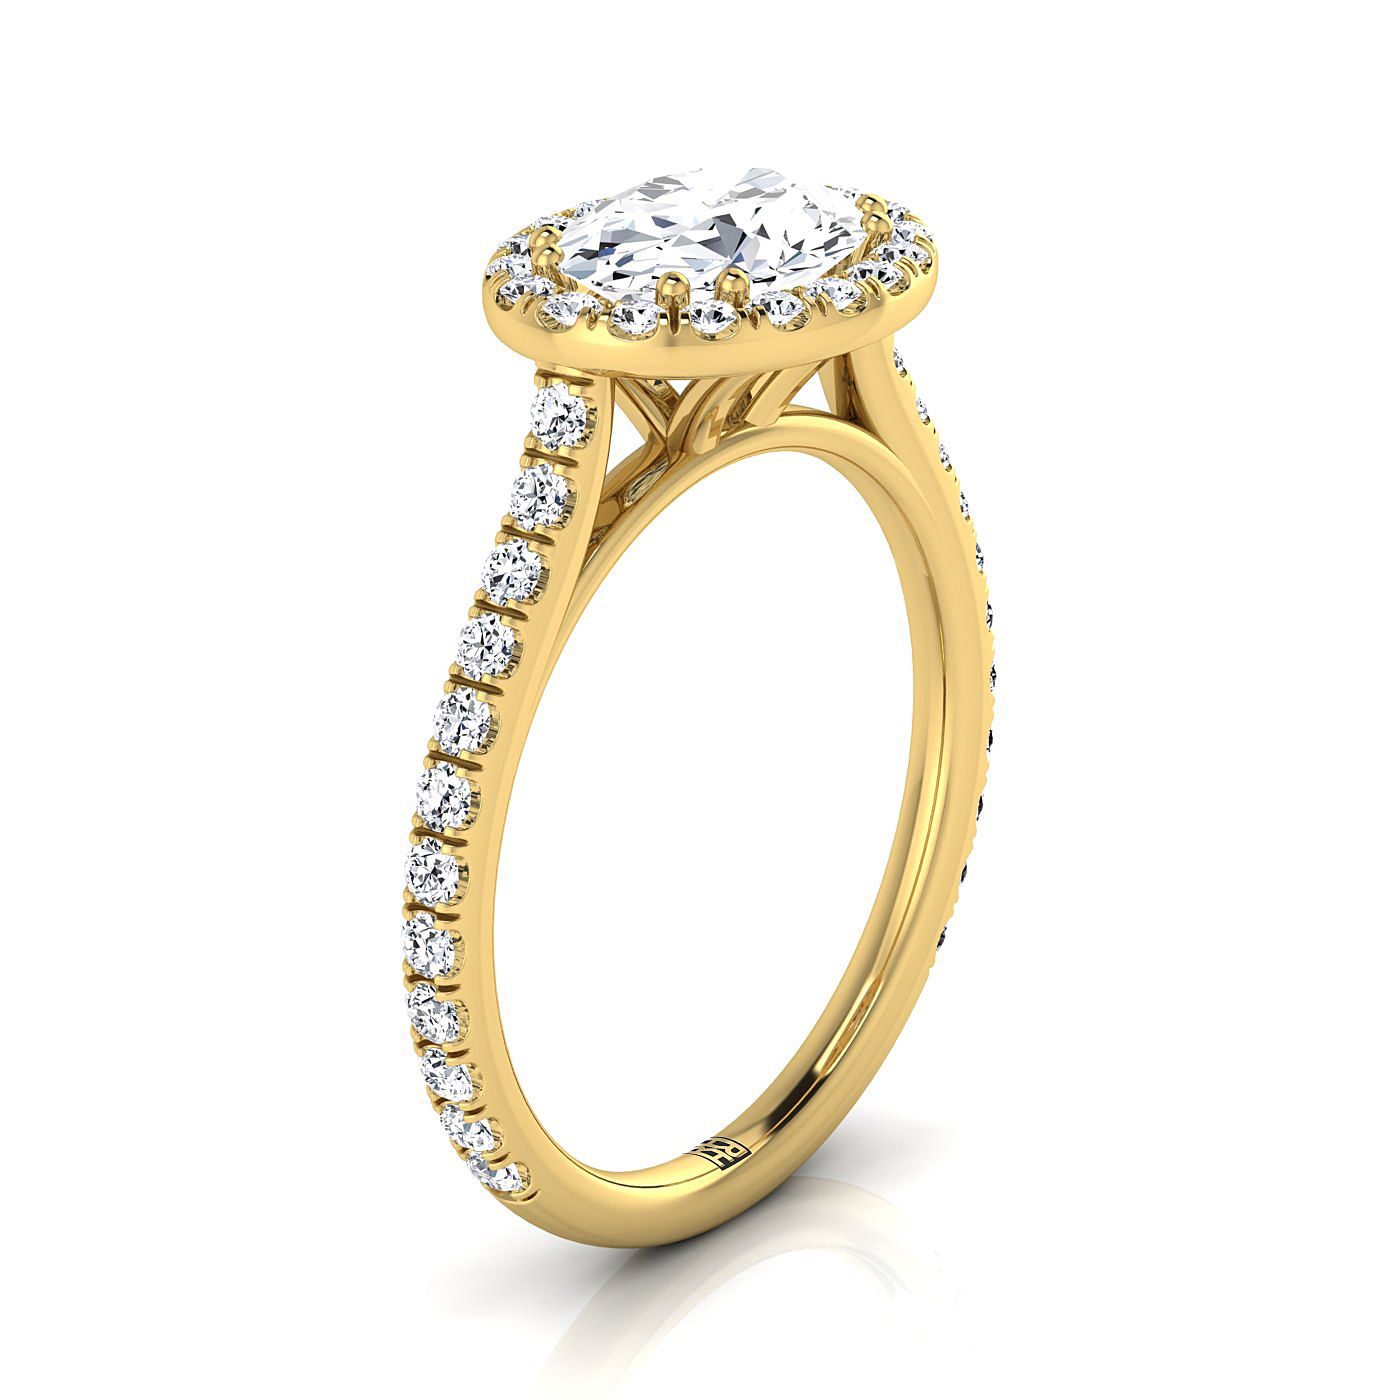 18K Yellow Gold Oval Swiss Blue Topaz Horizontal Fancy East West Diamond Halo Engagement Ring -1/2ctw